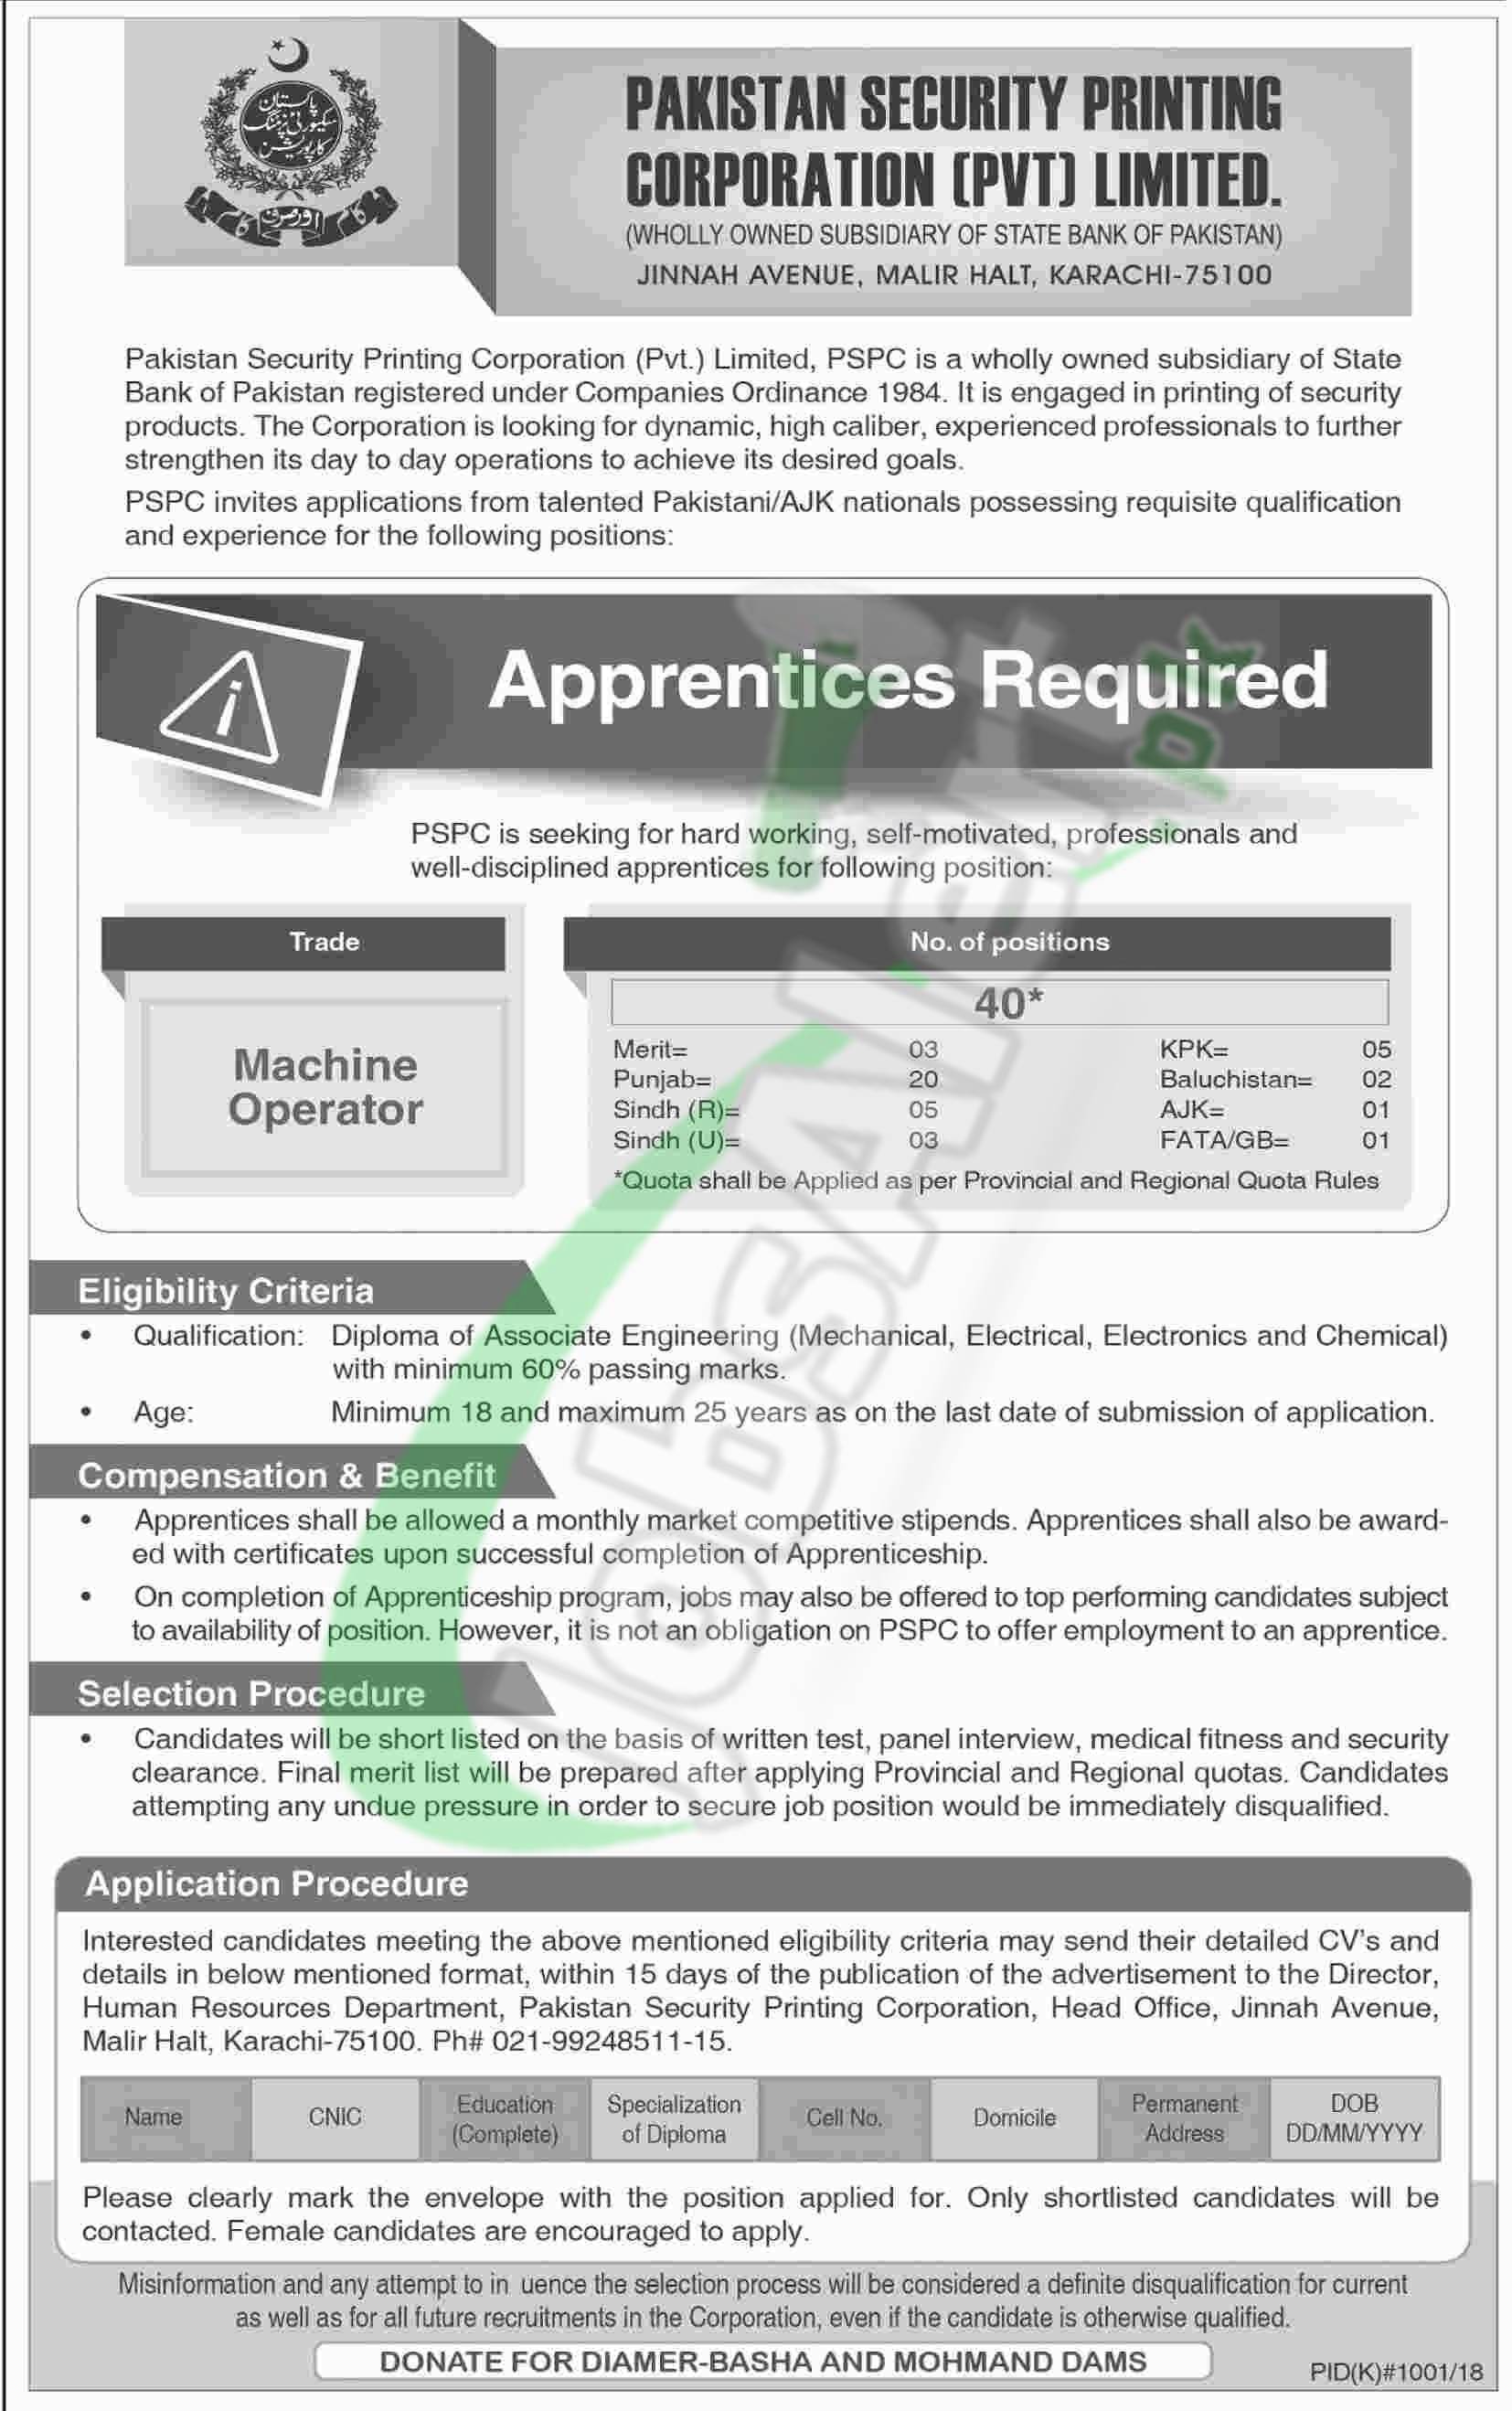 Pakistan Security Printing Corporation Apprenticeship 2018